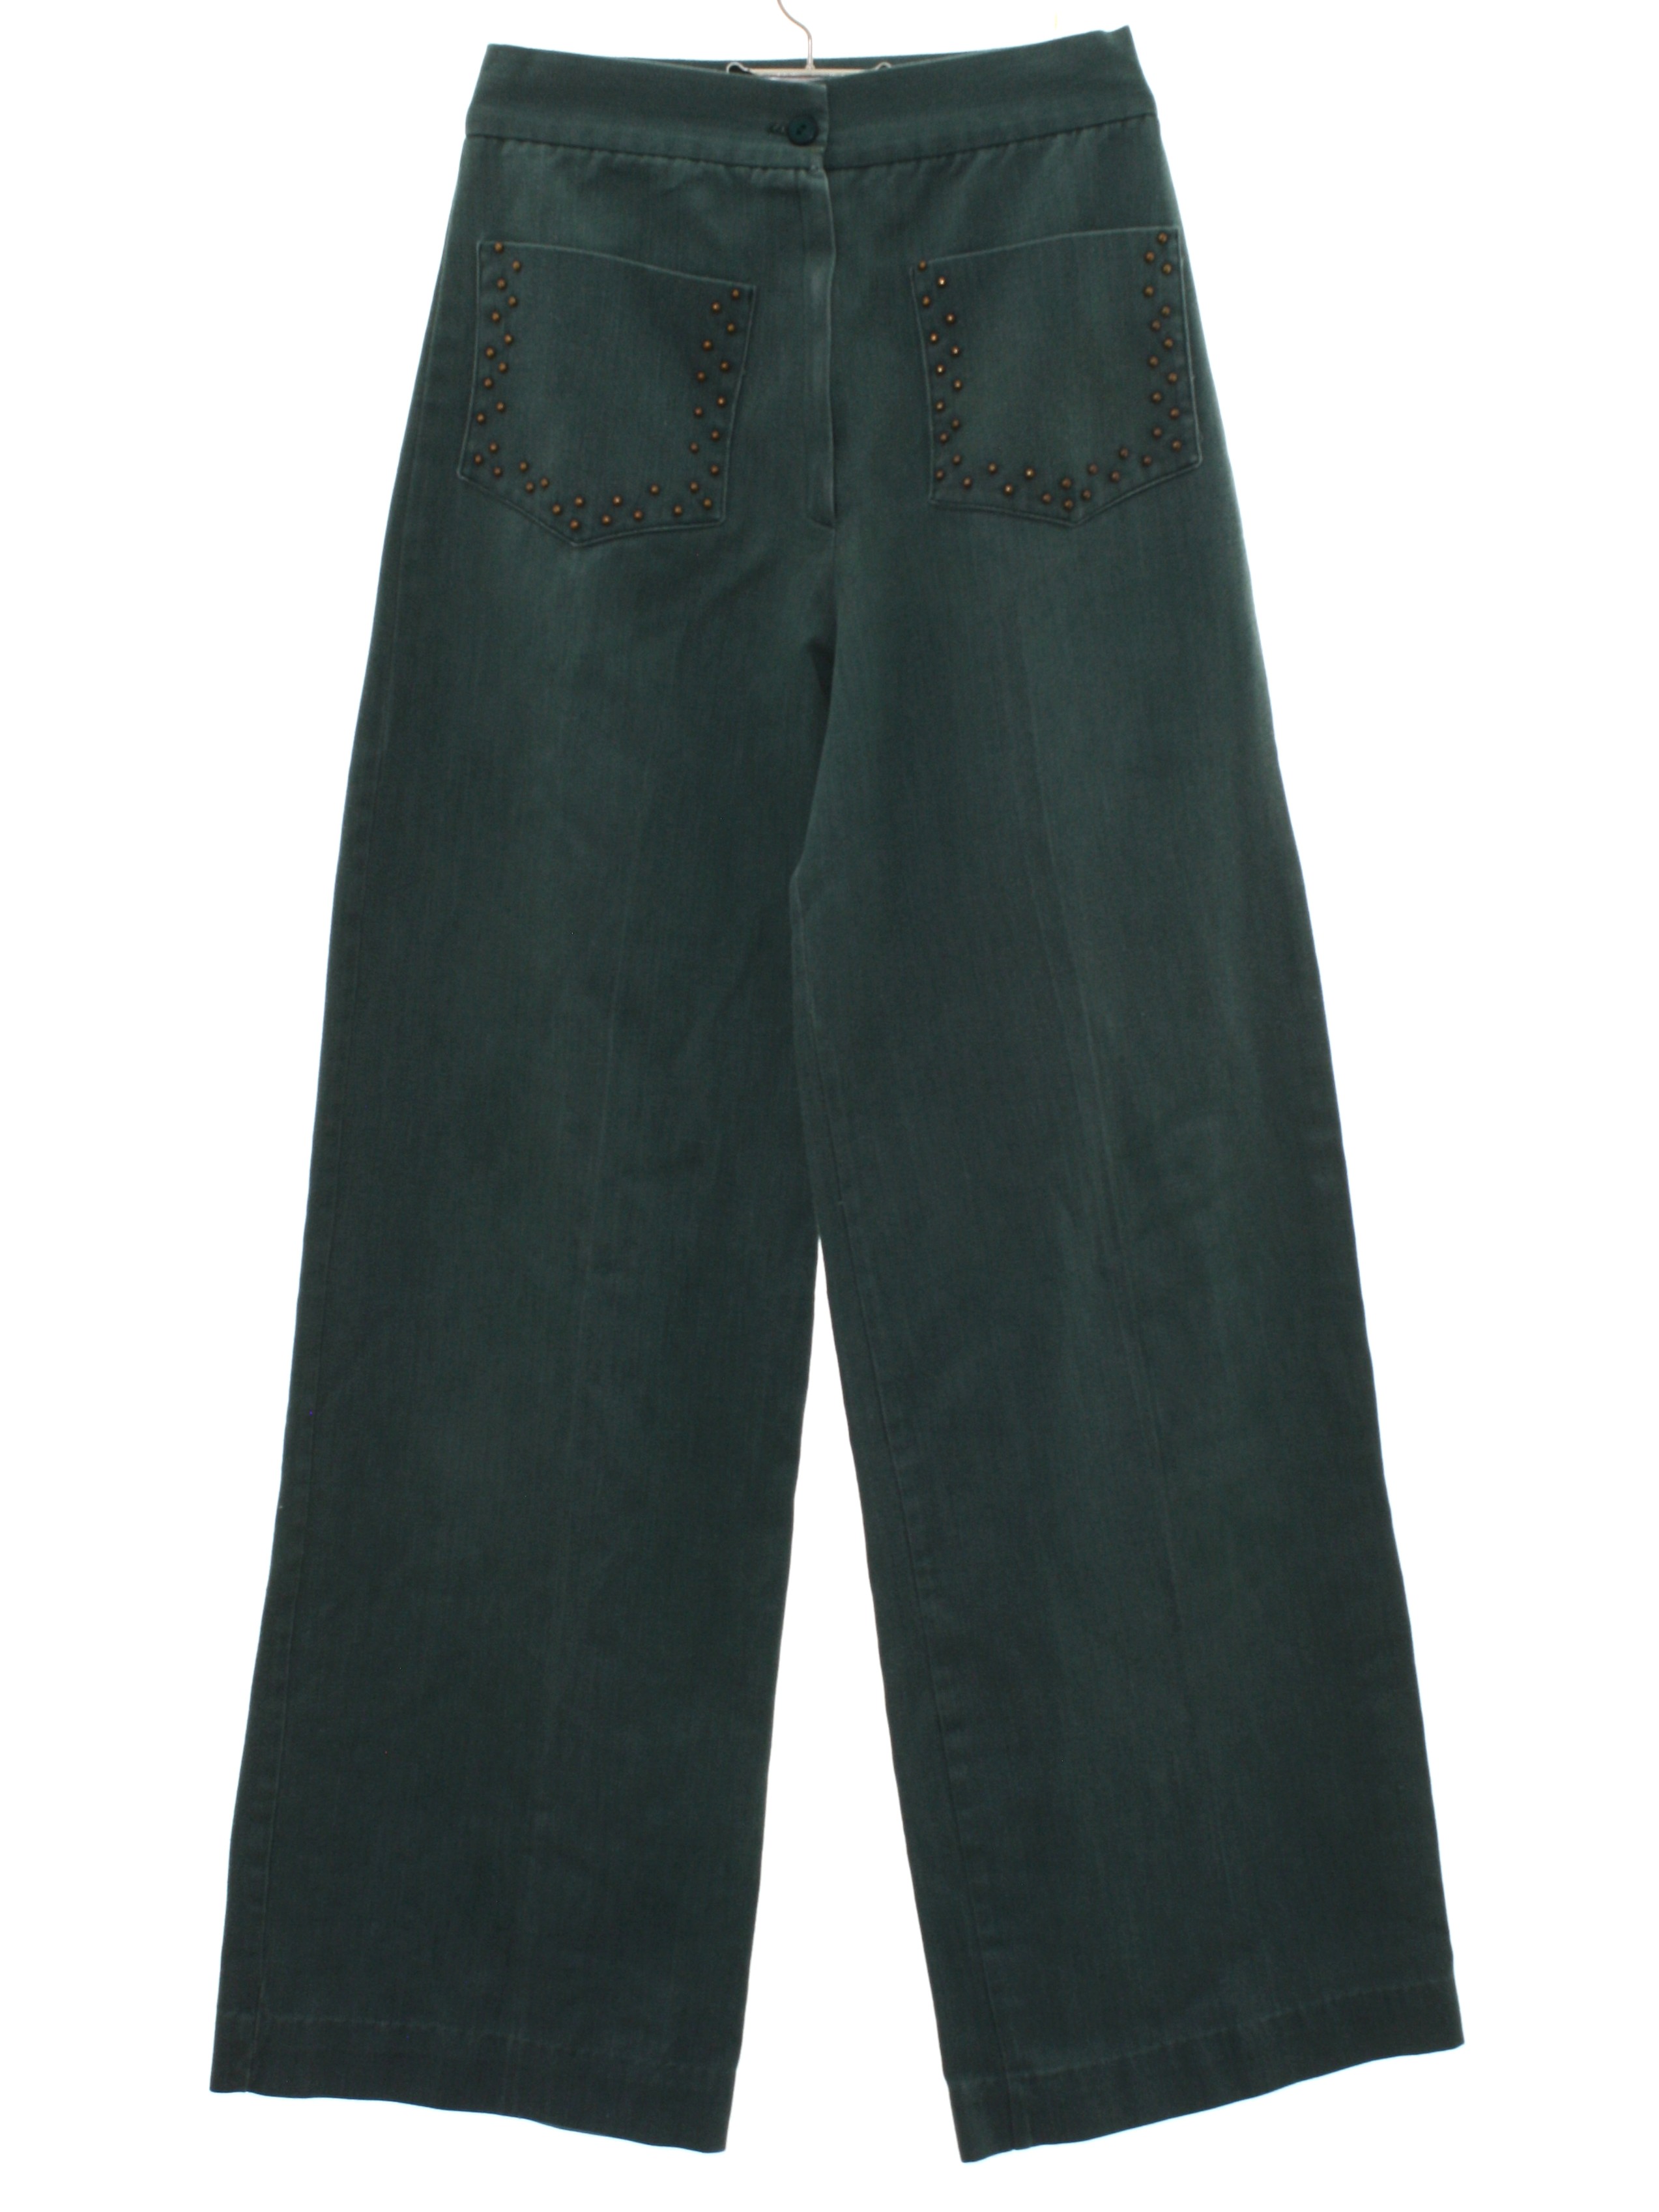 1970's Bellbottom Pants: 70s Home Sewn- Womensdark sage green brushed ...